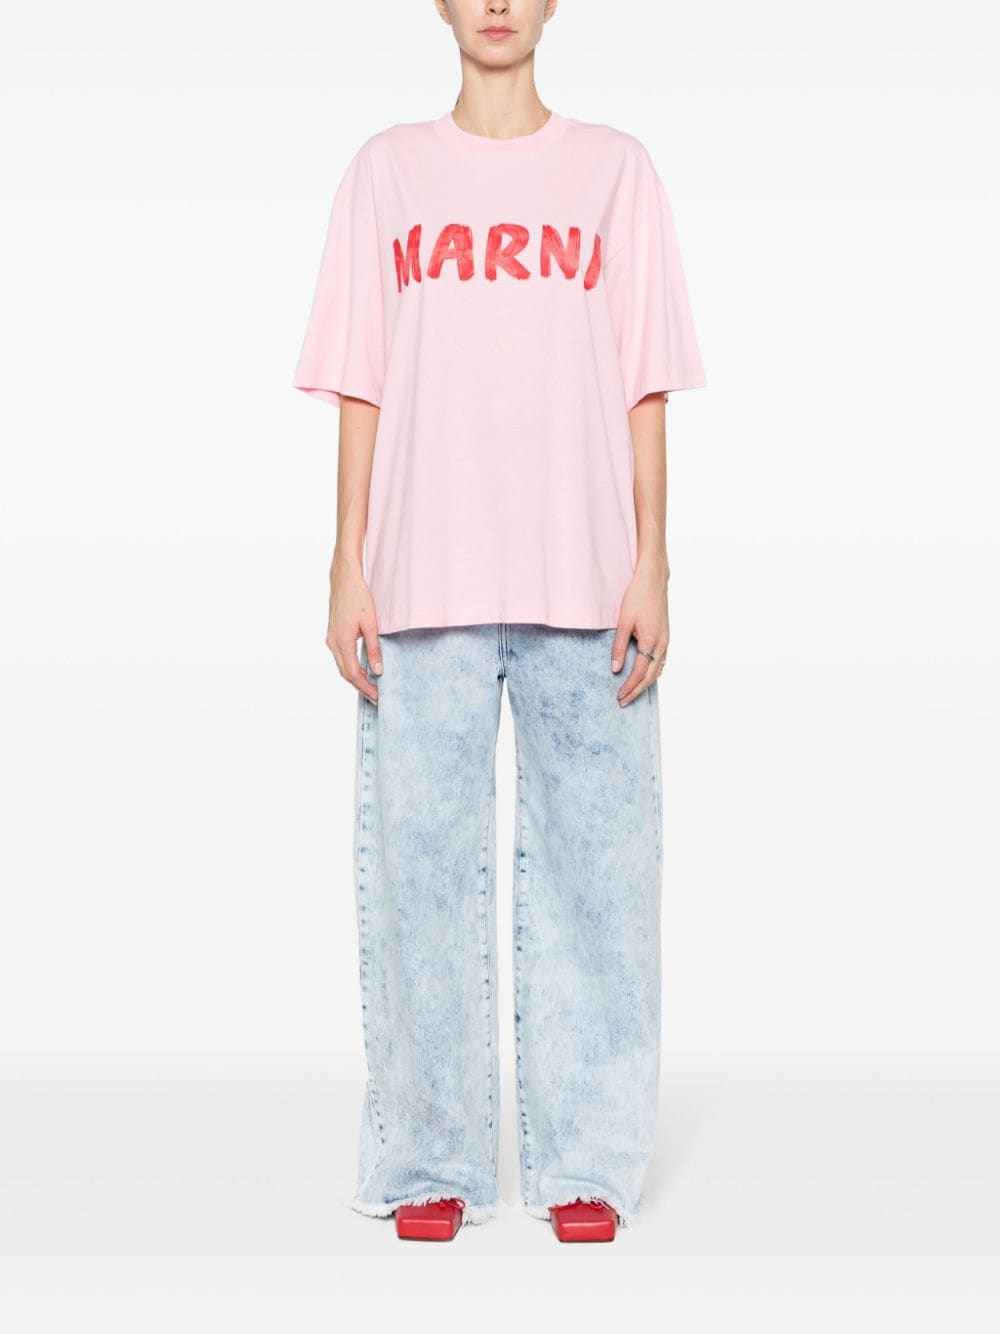 Marni logo-print cotton T-shirt - Roze